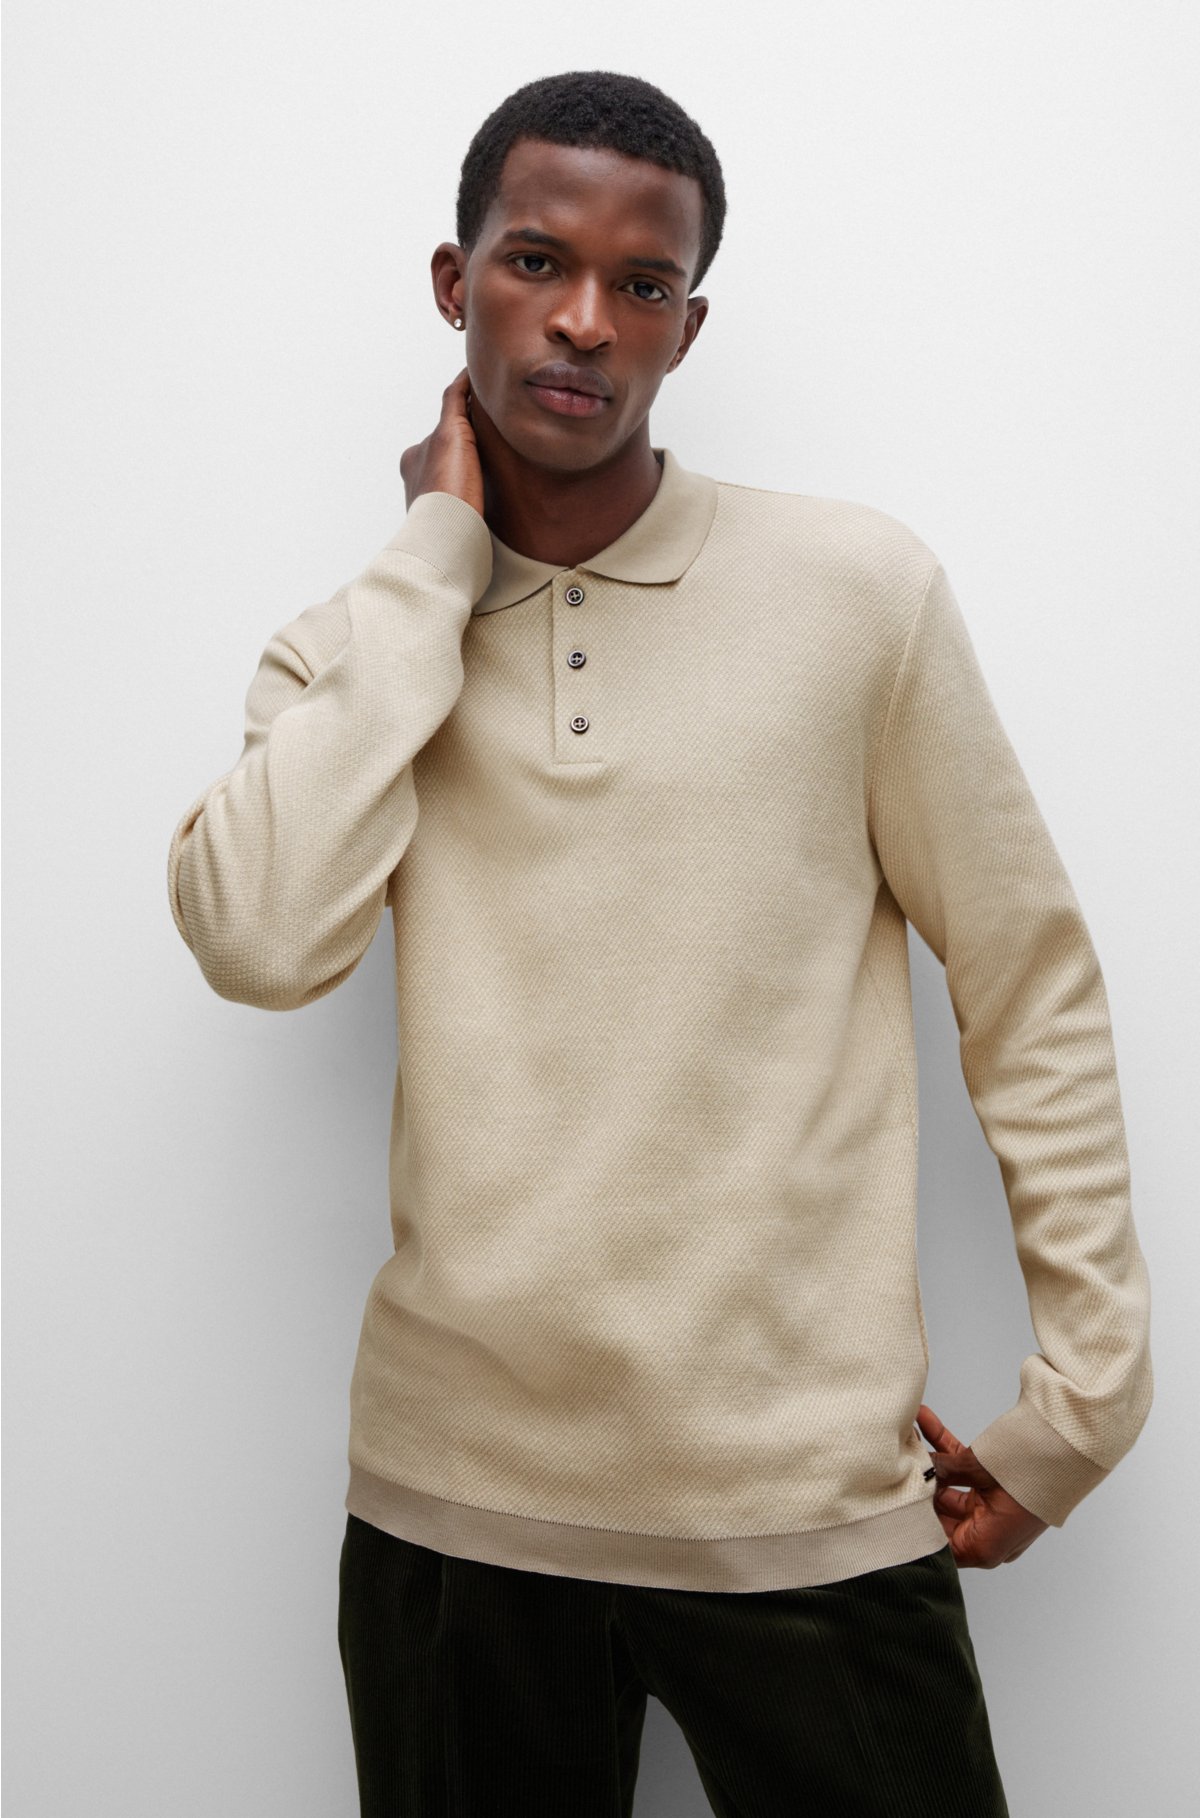 Men's Polo Shirts - Cashmere & Cotton Long Sleeve Polo Shirts